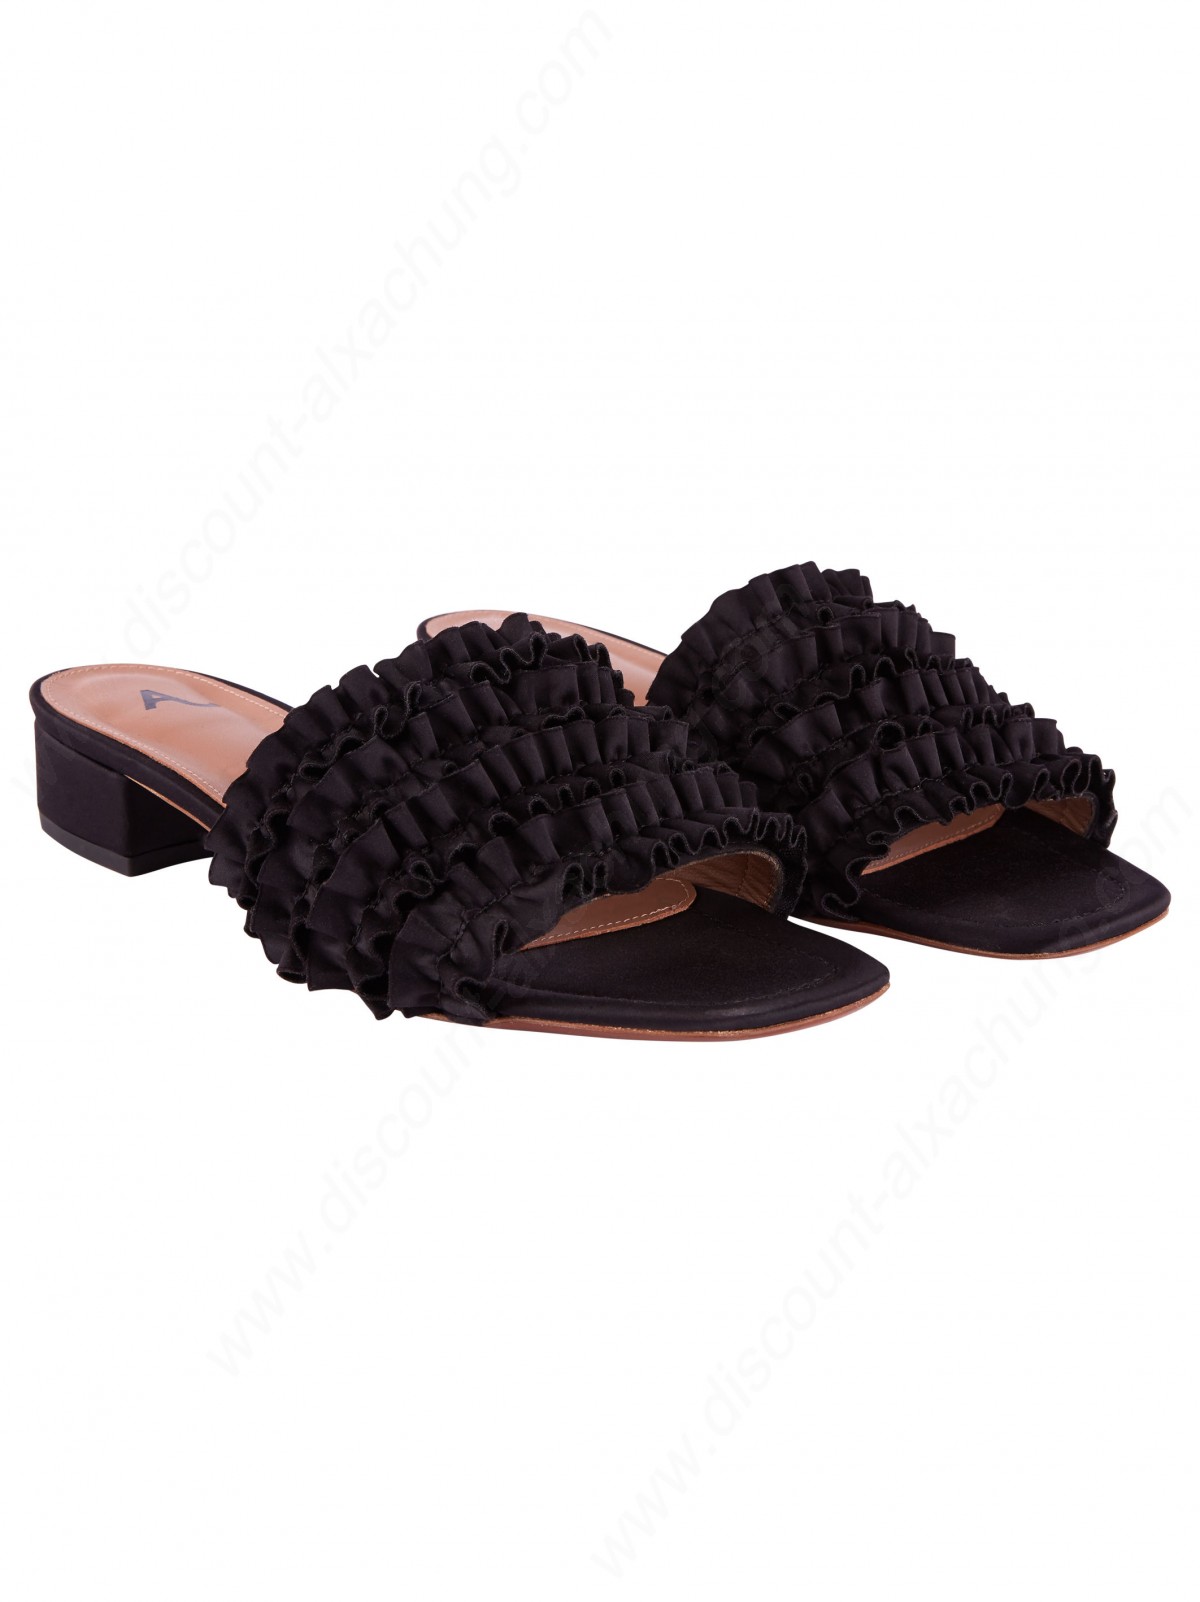 Alexachung Black Ruffle Sandal - -2